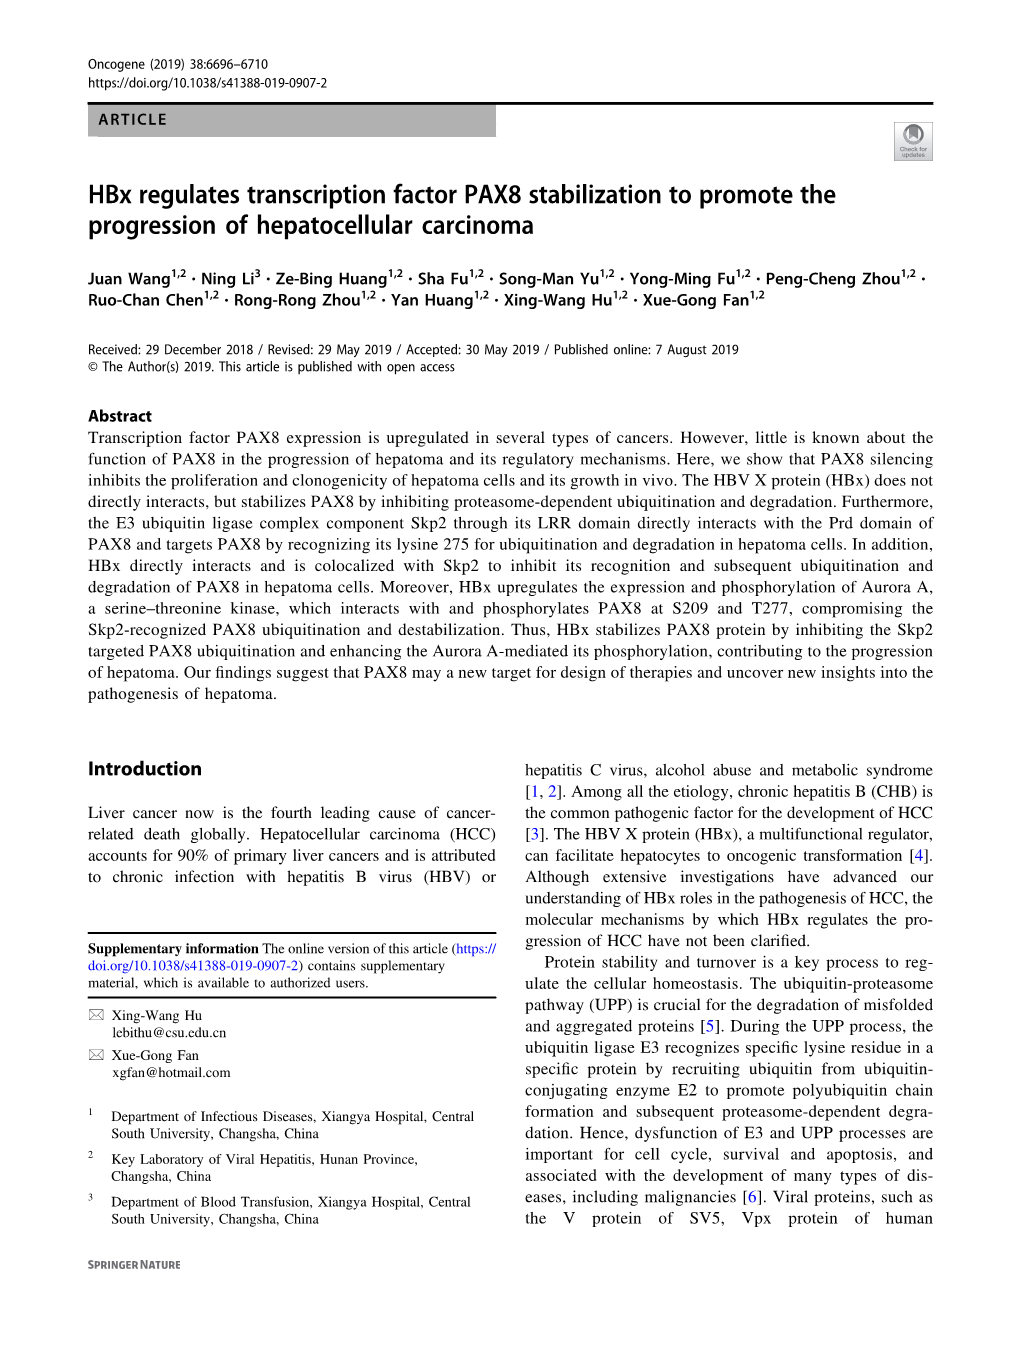 Hbx Regulates Transcription Factor PAX8 Stabilization to Promote the Progression of Hepatocellular Carcinoma